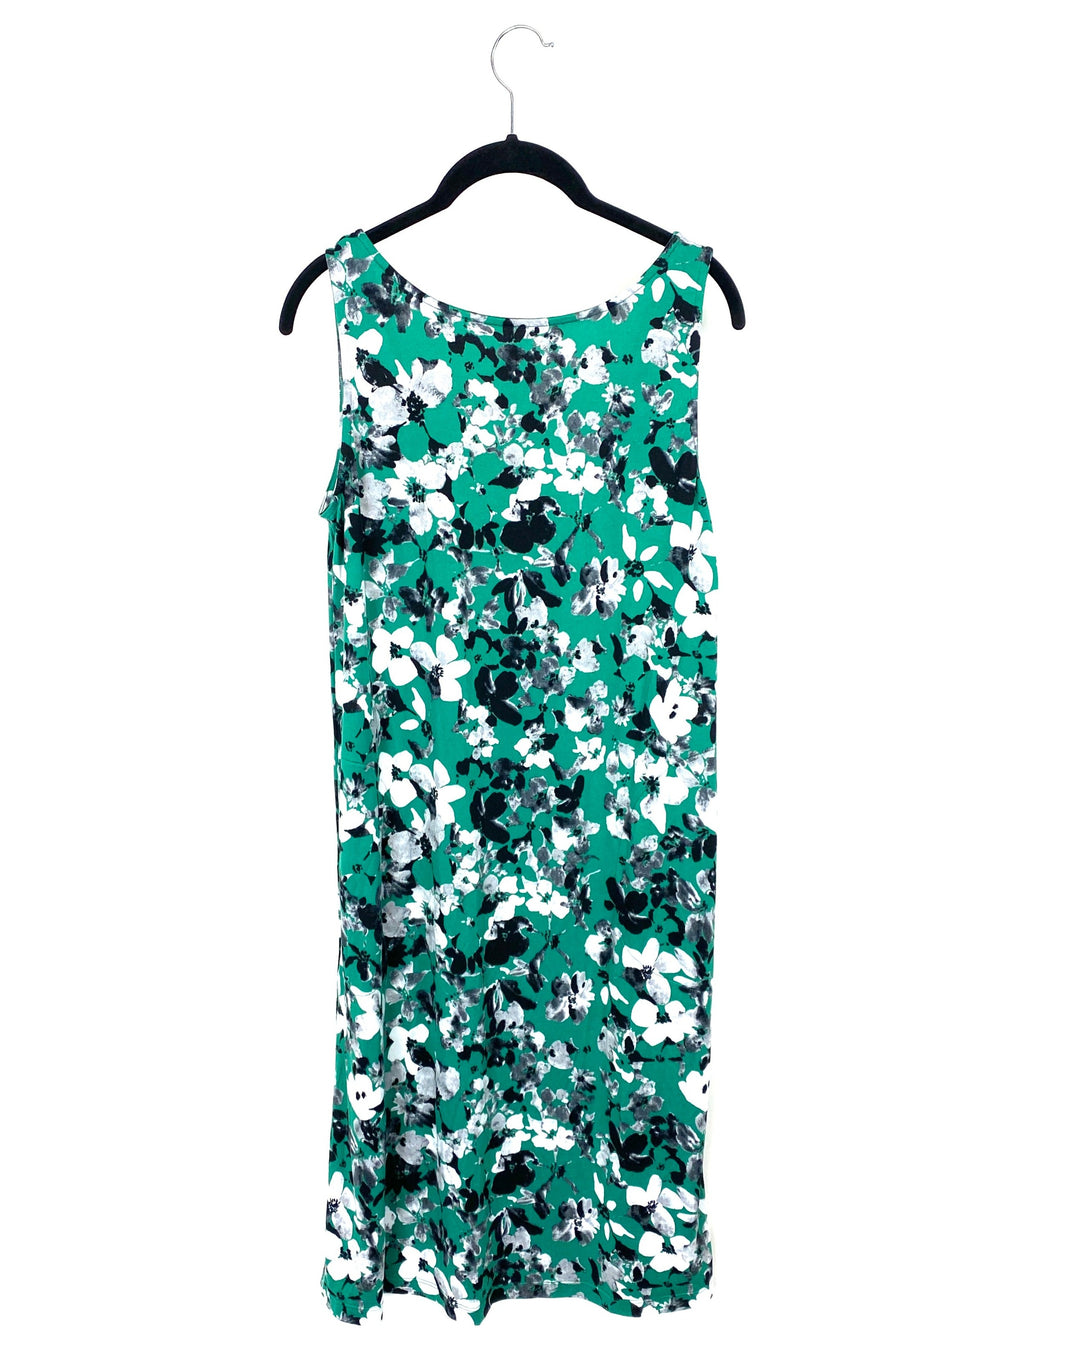 Green Floral Dress - Small/Medium